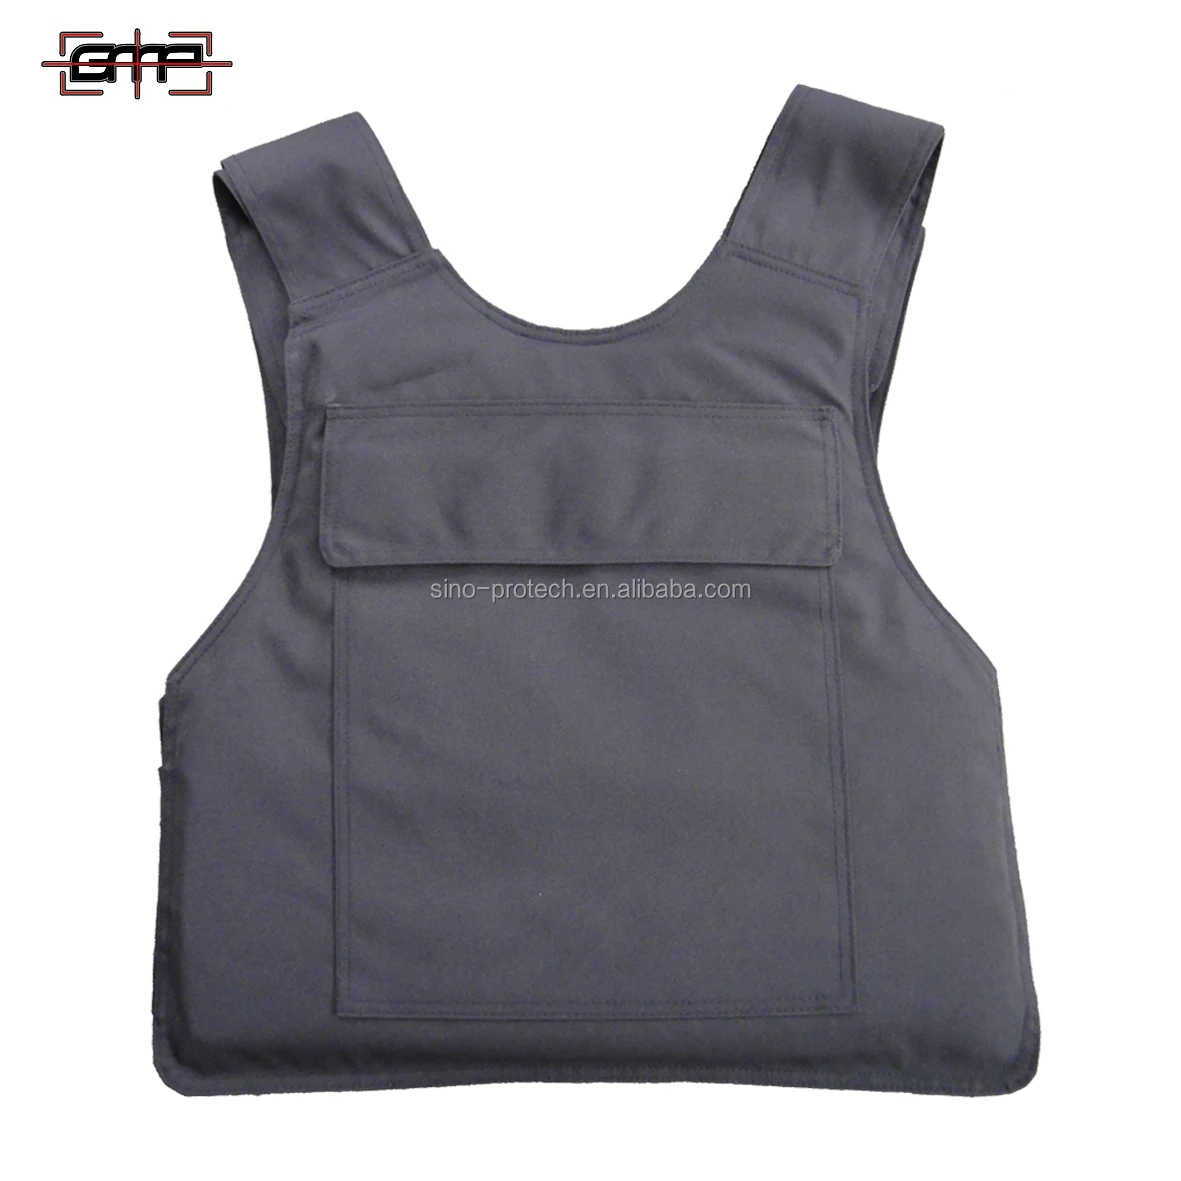 

Zhongli Bulletproof cover military camo body armor ballistic vest, Black/customized